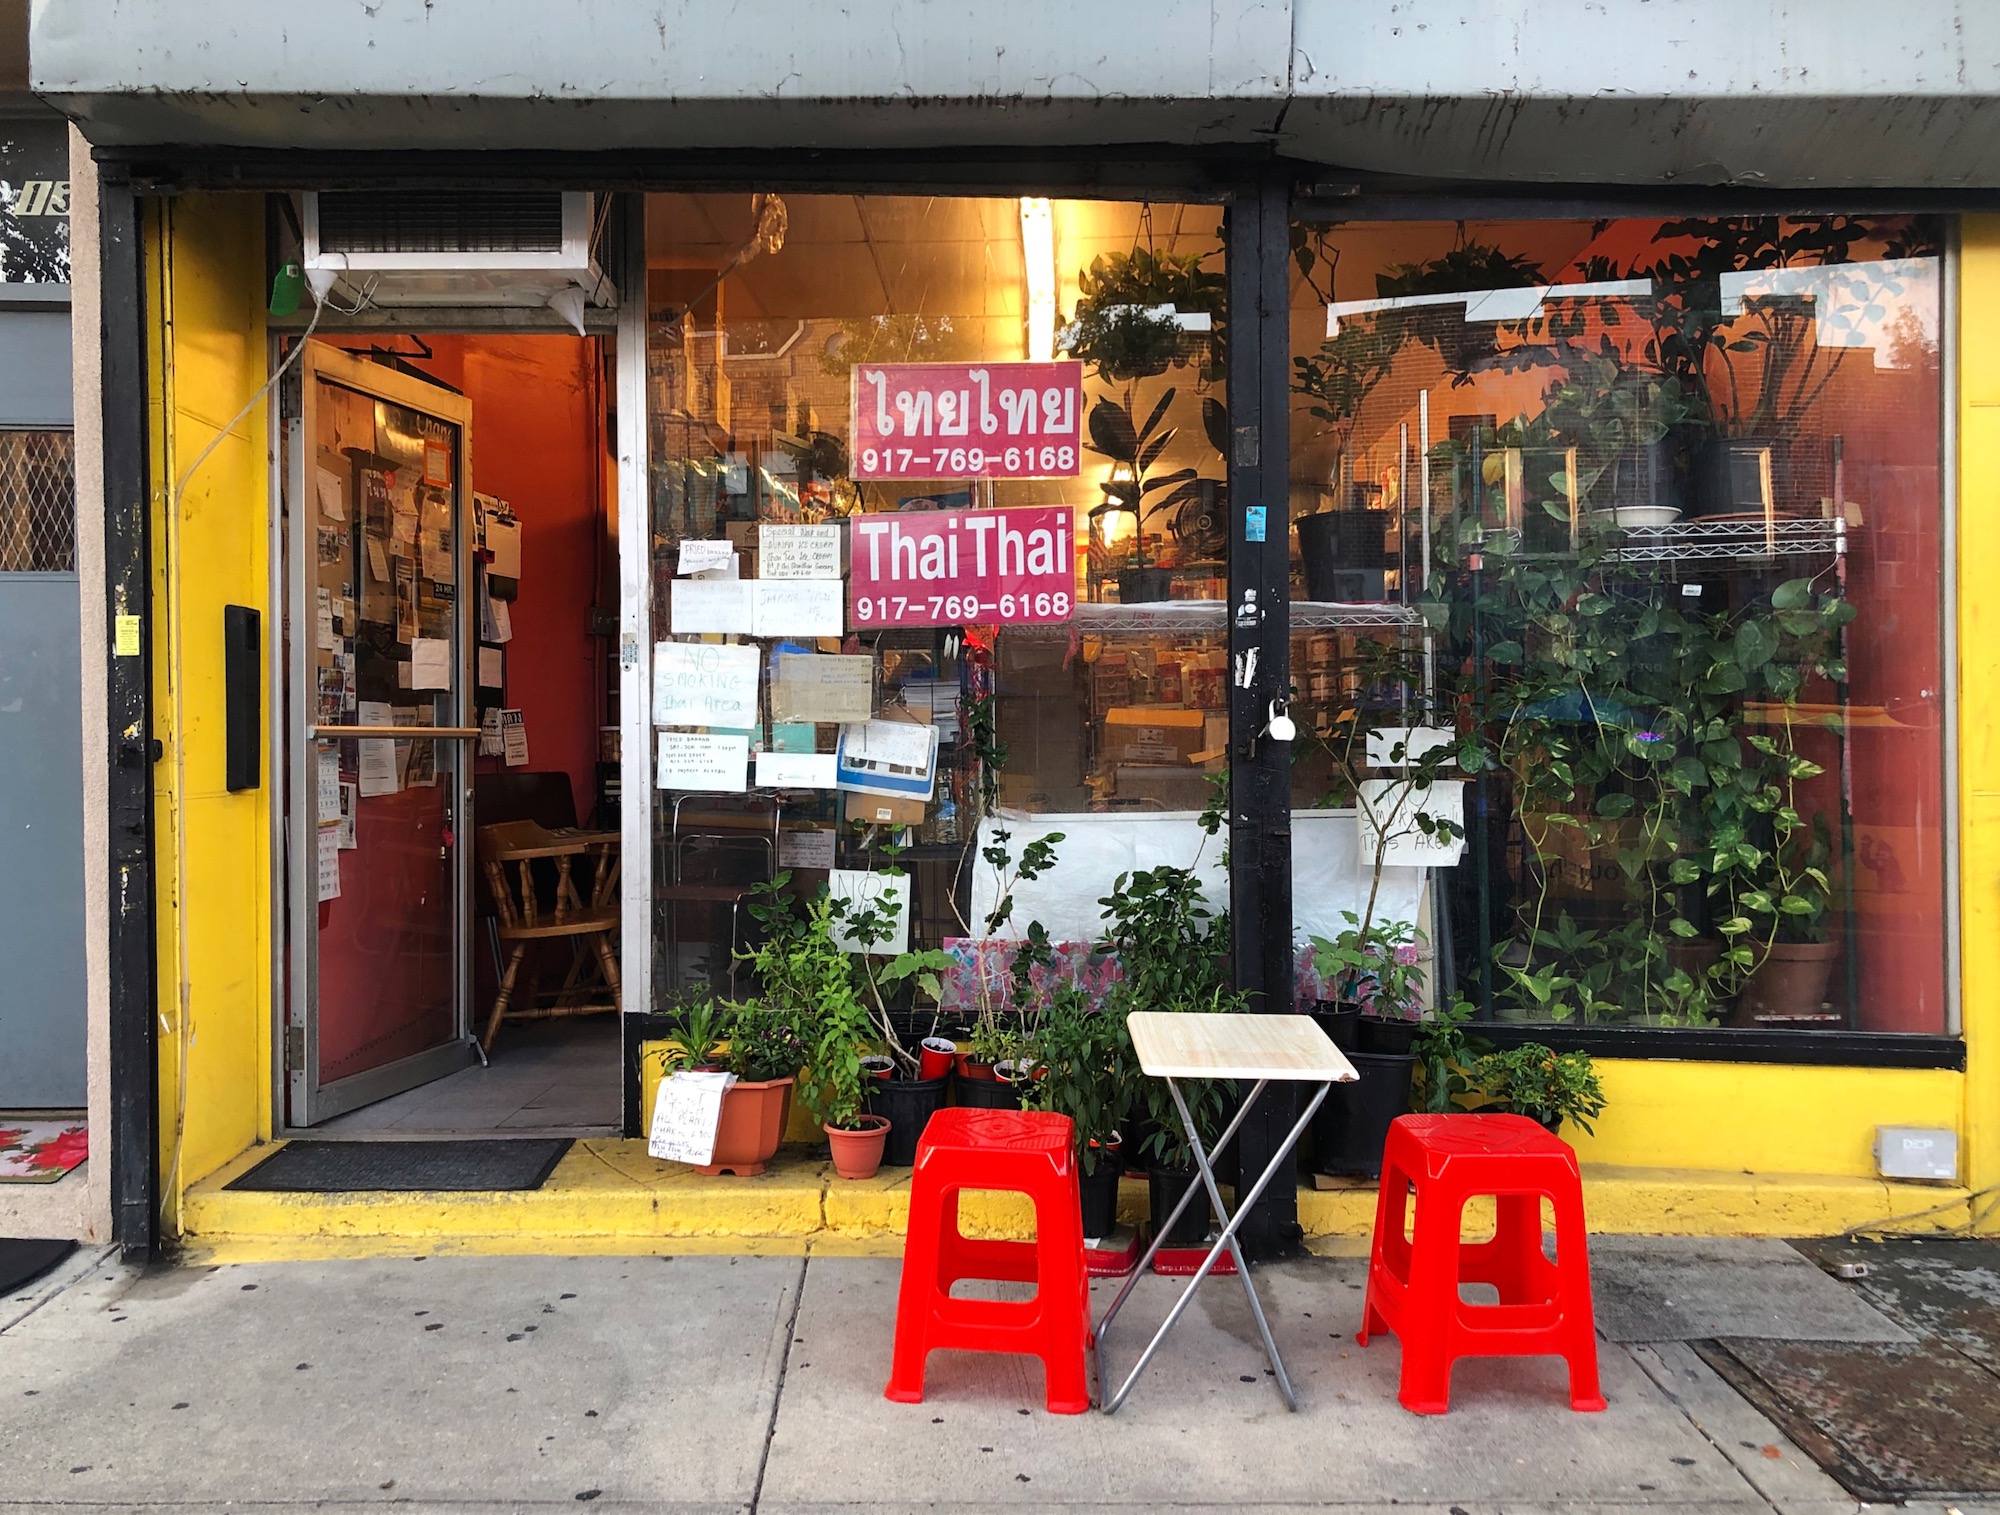 Thai Thai Local Thai Convenience and Grocery Store in Queens